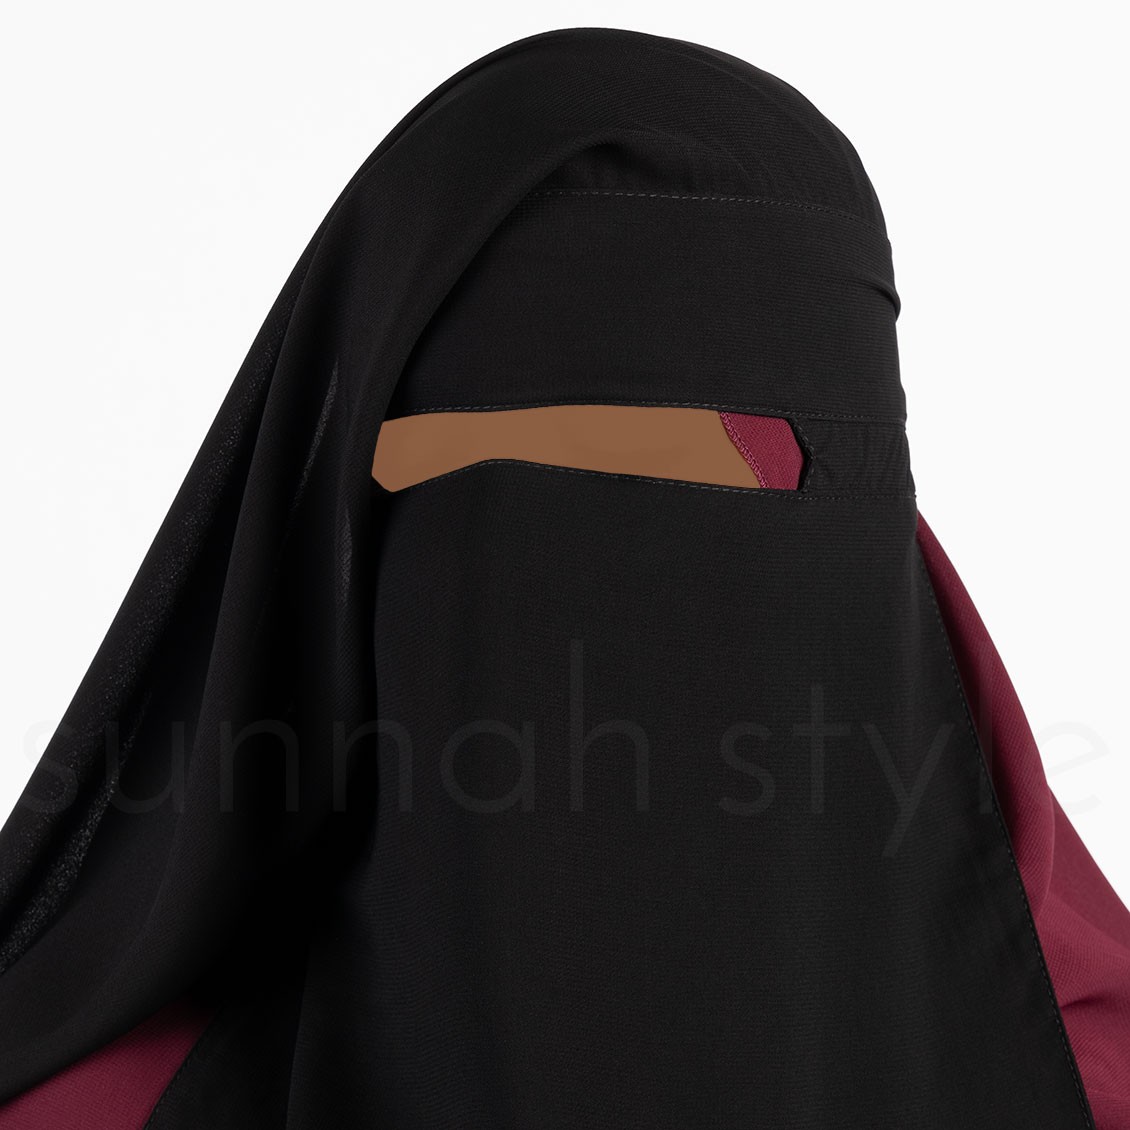 Sunnah Style No-Pinch Two Layer Niqab Black